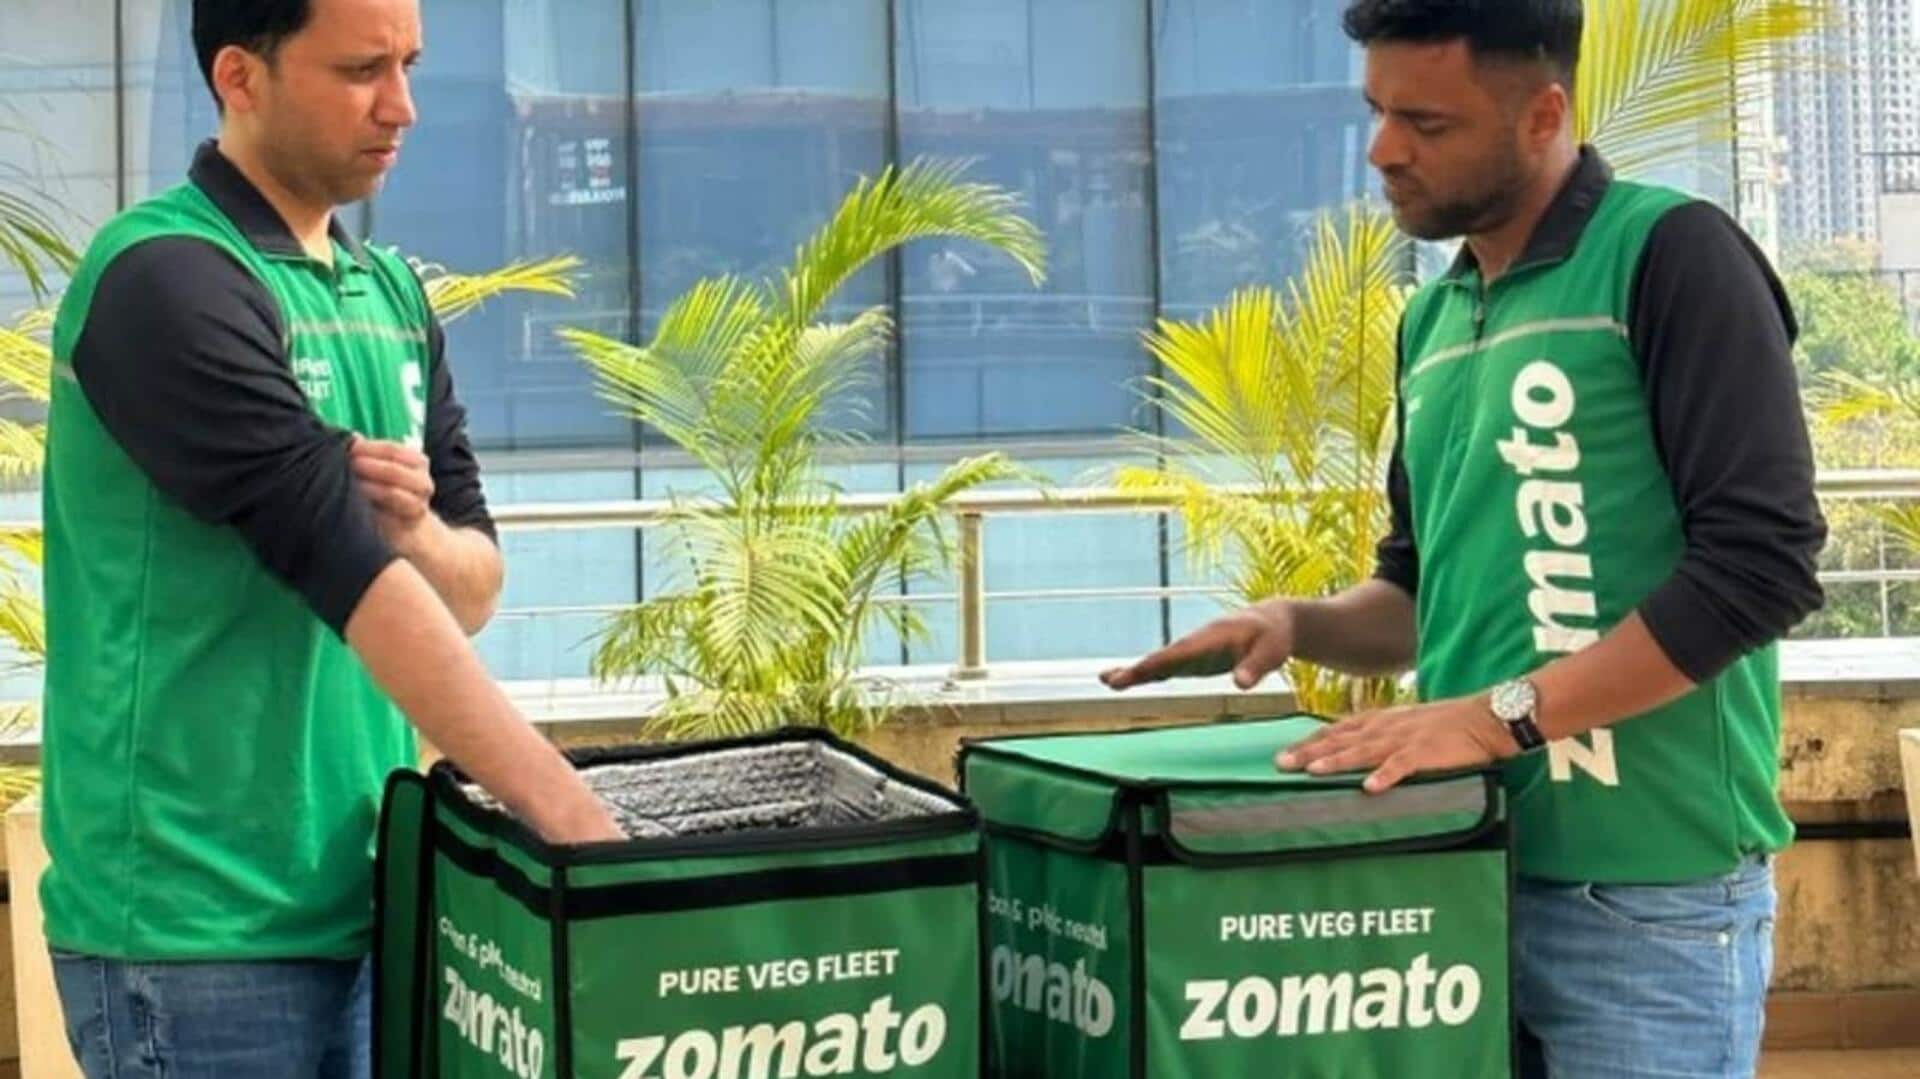 Zomato drops green uniforms for 'pure veg' fleet after criticism